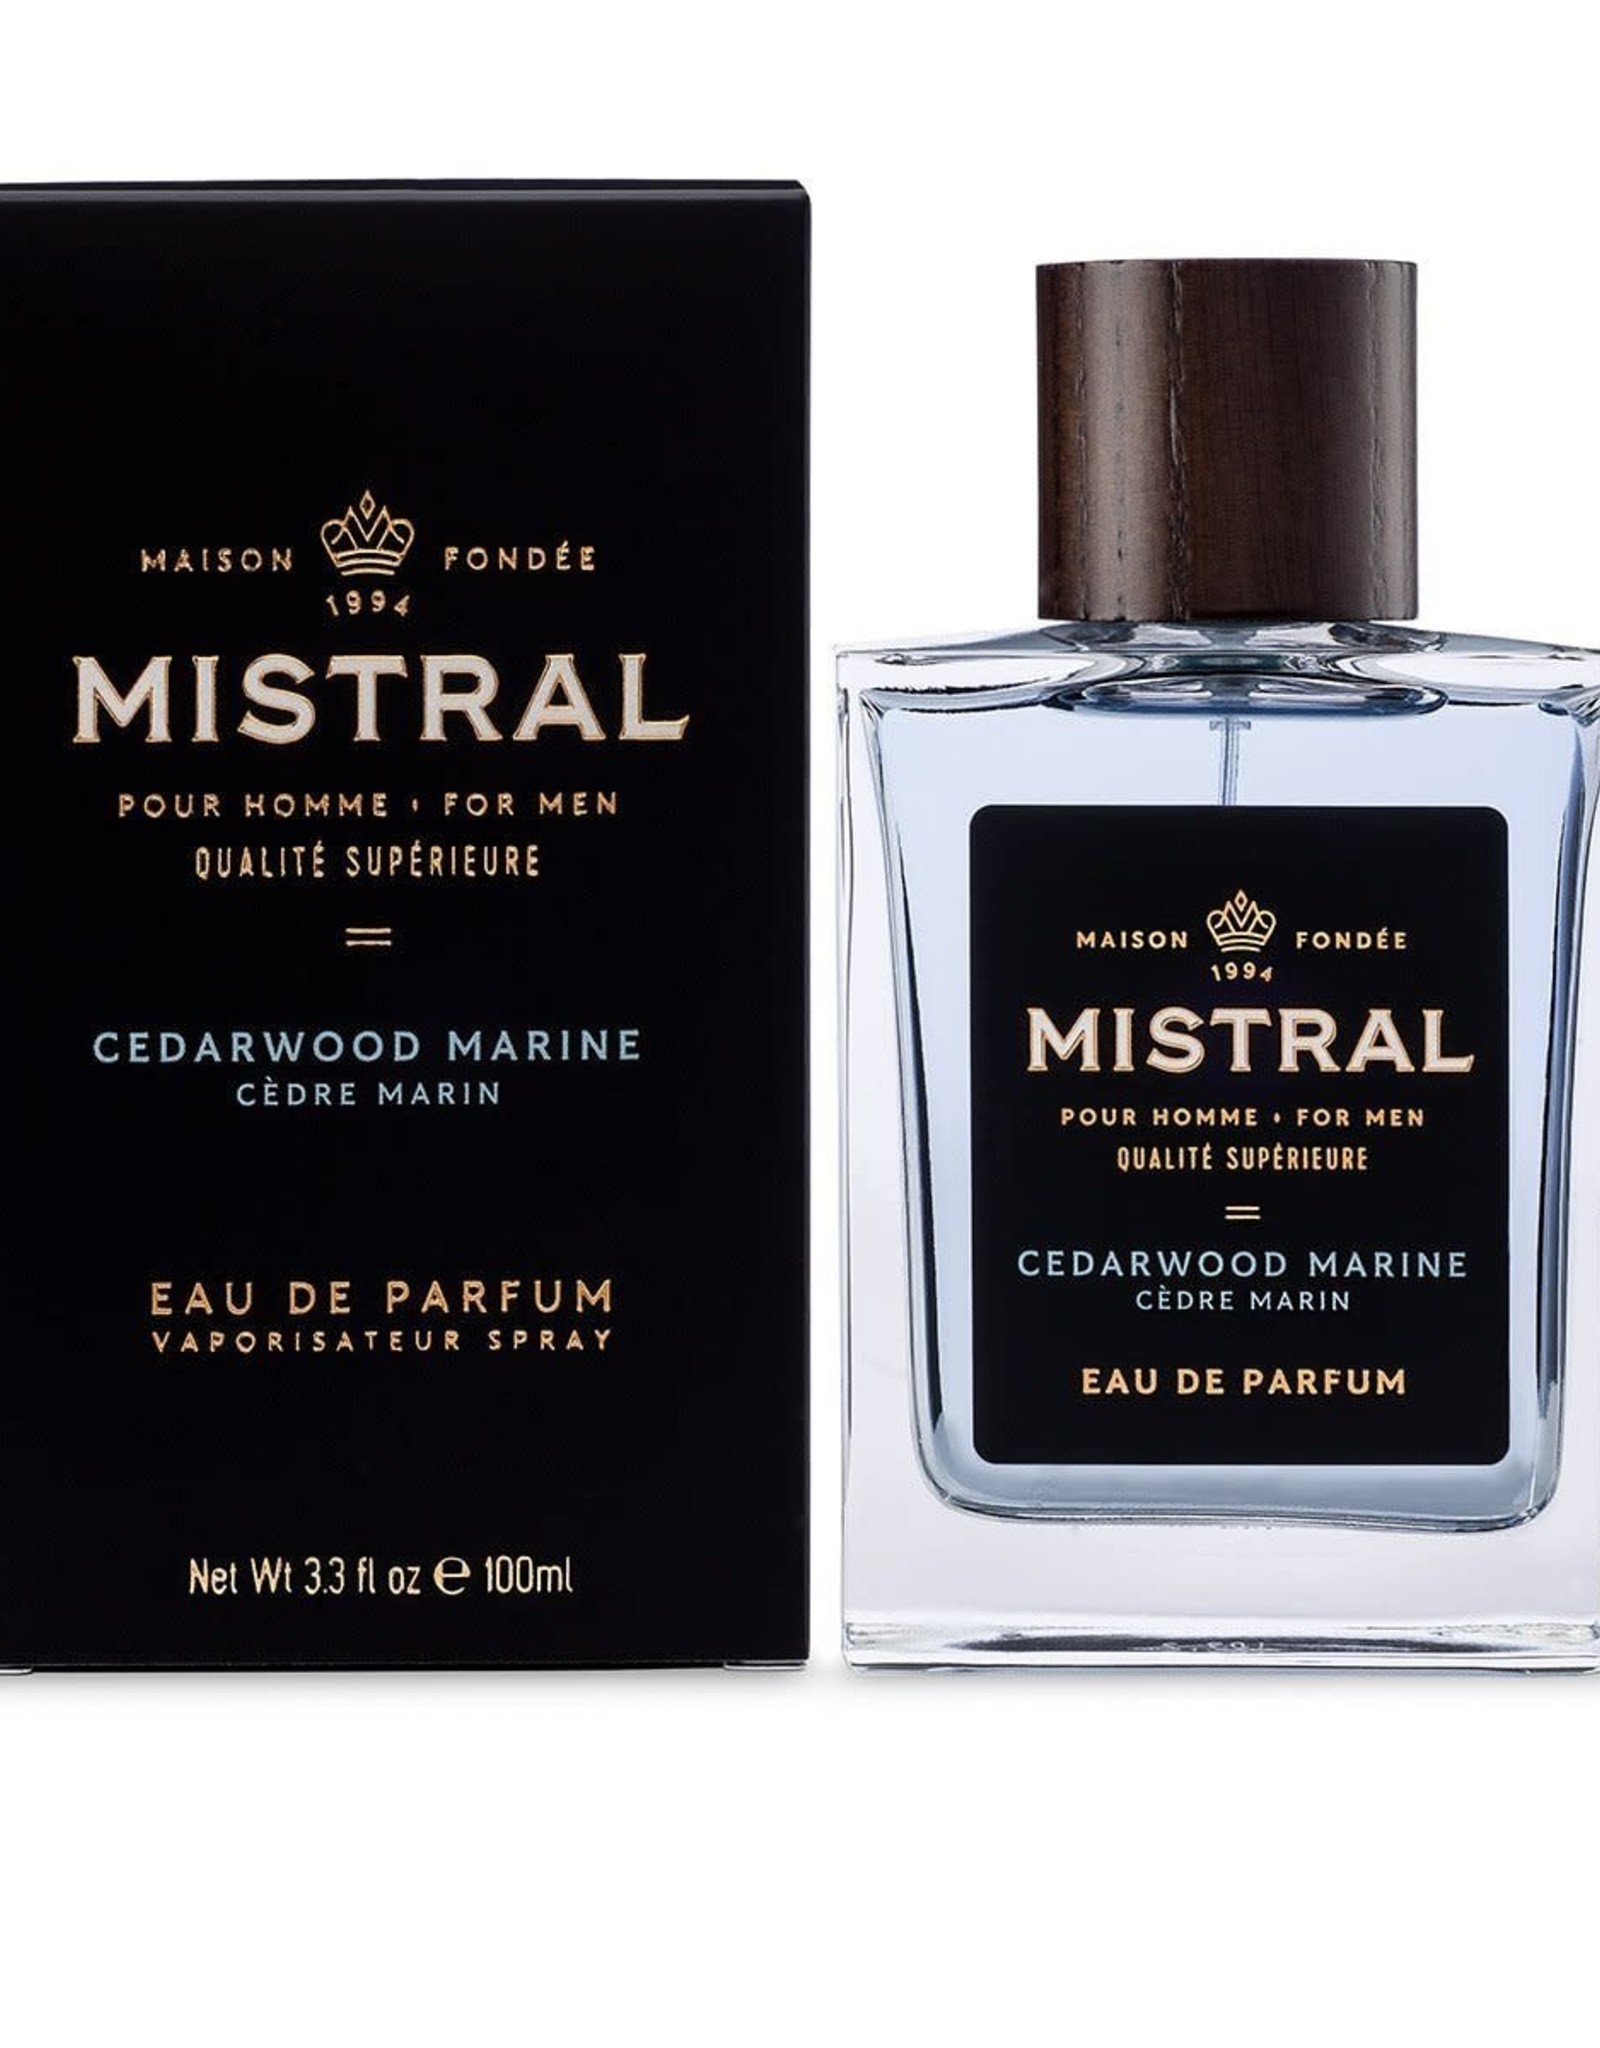 Cedarwood Marine Eau de Parfum